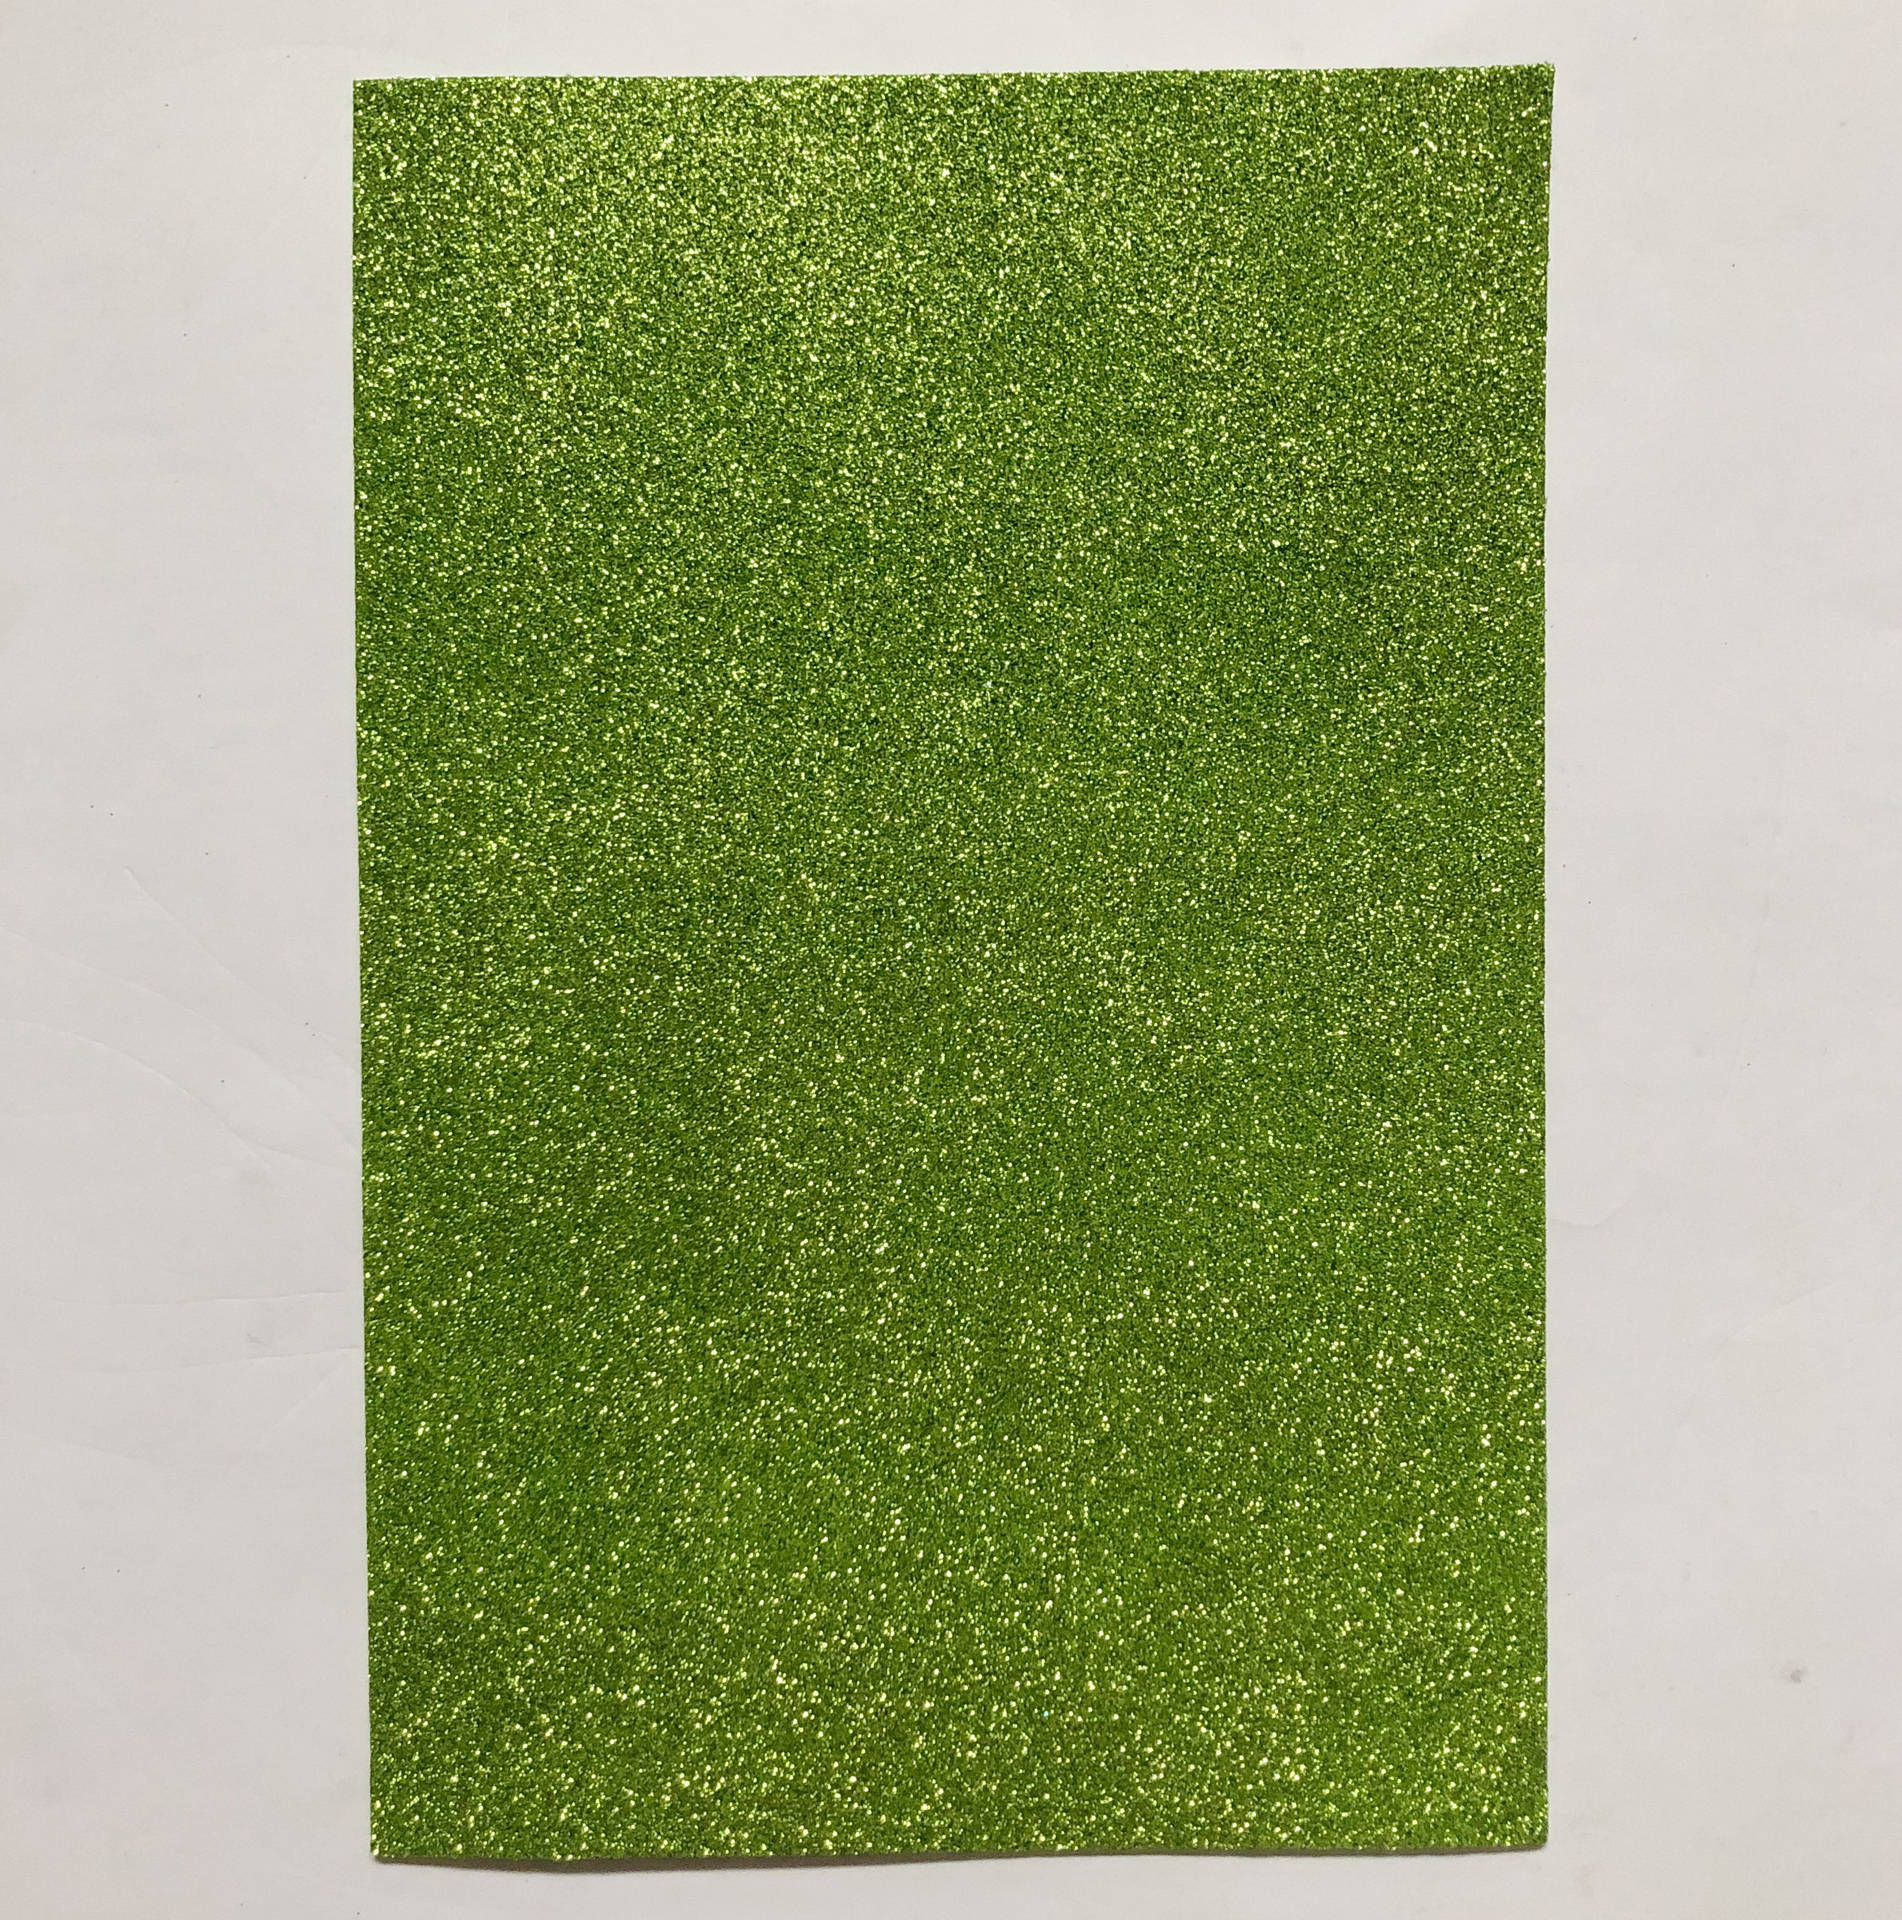 Green Glitter 2927 X 2955 Wallpaper